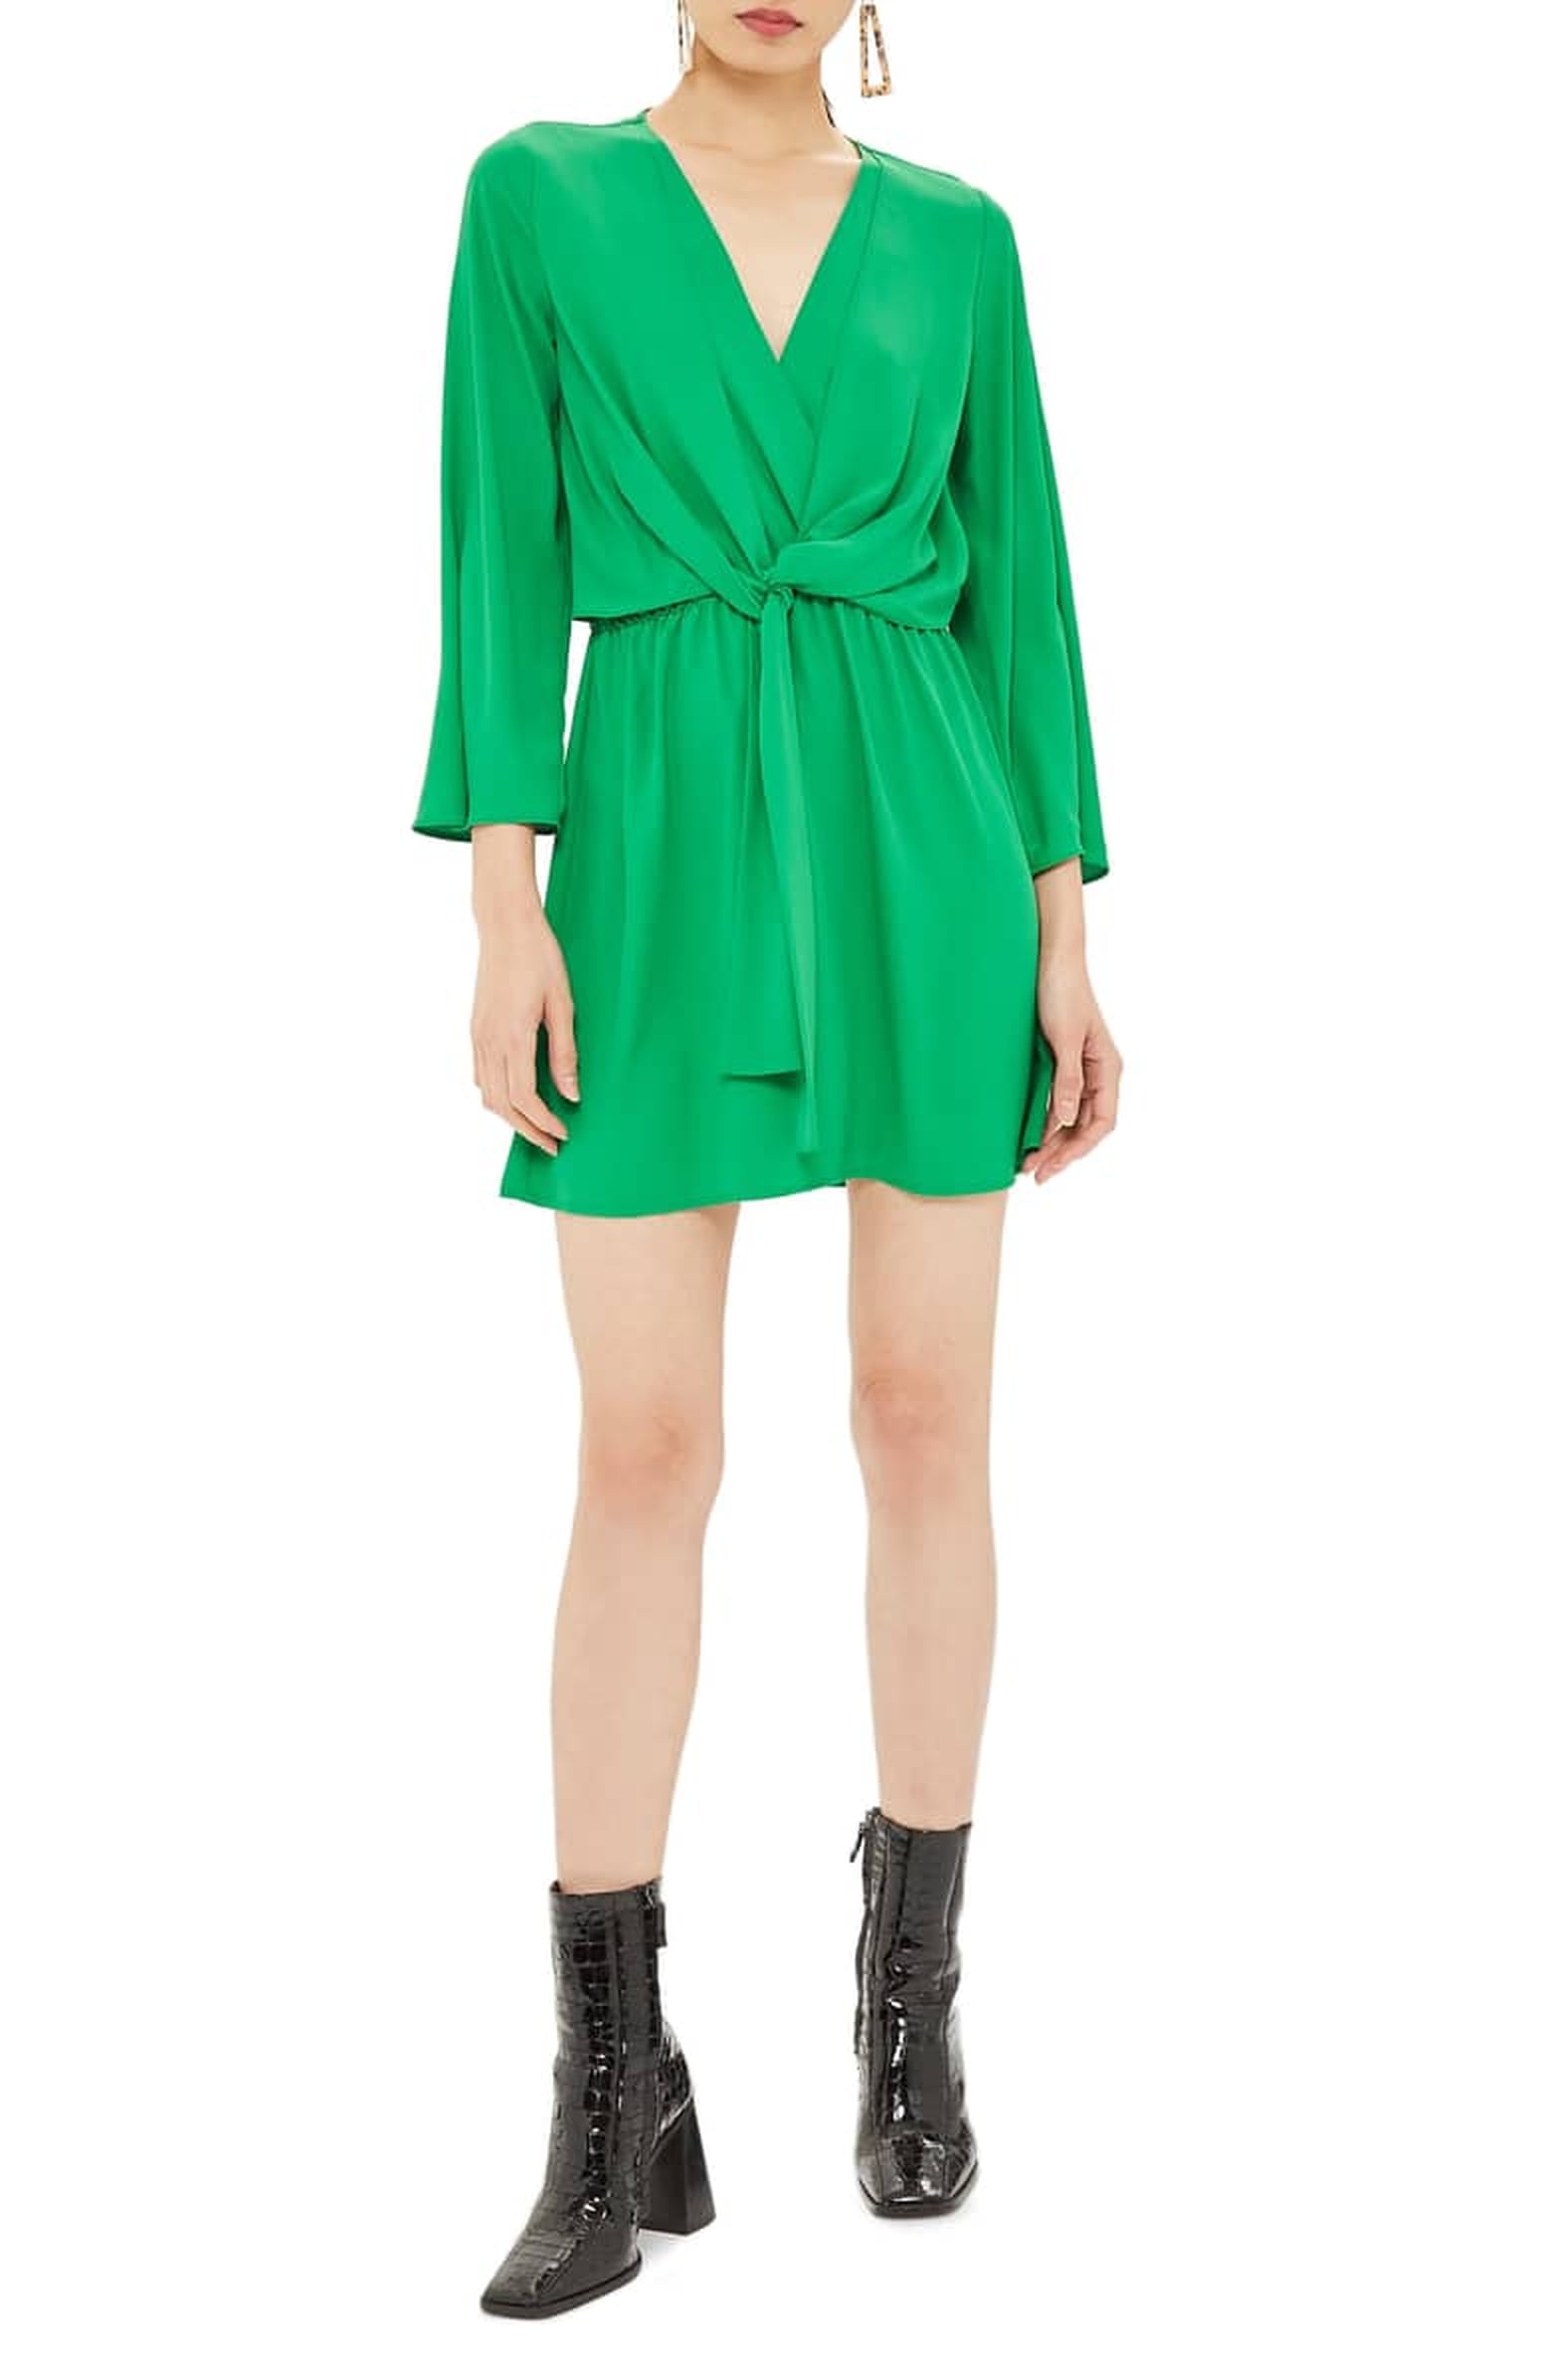 Kate Middleton's Green Dress by Eponine London 2019 | POPSUGAR Fashion